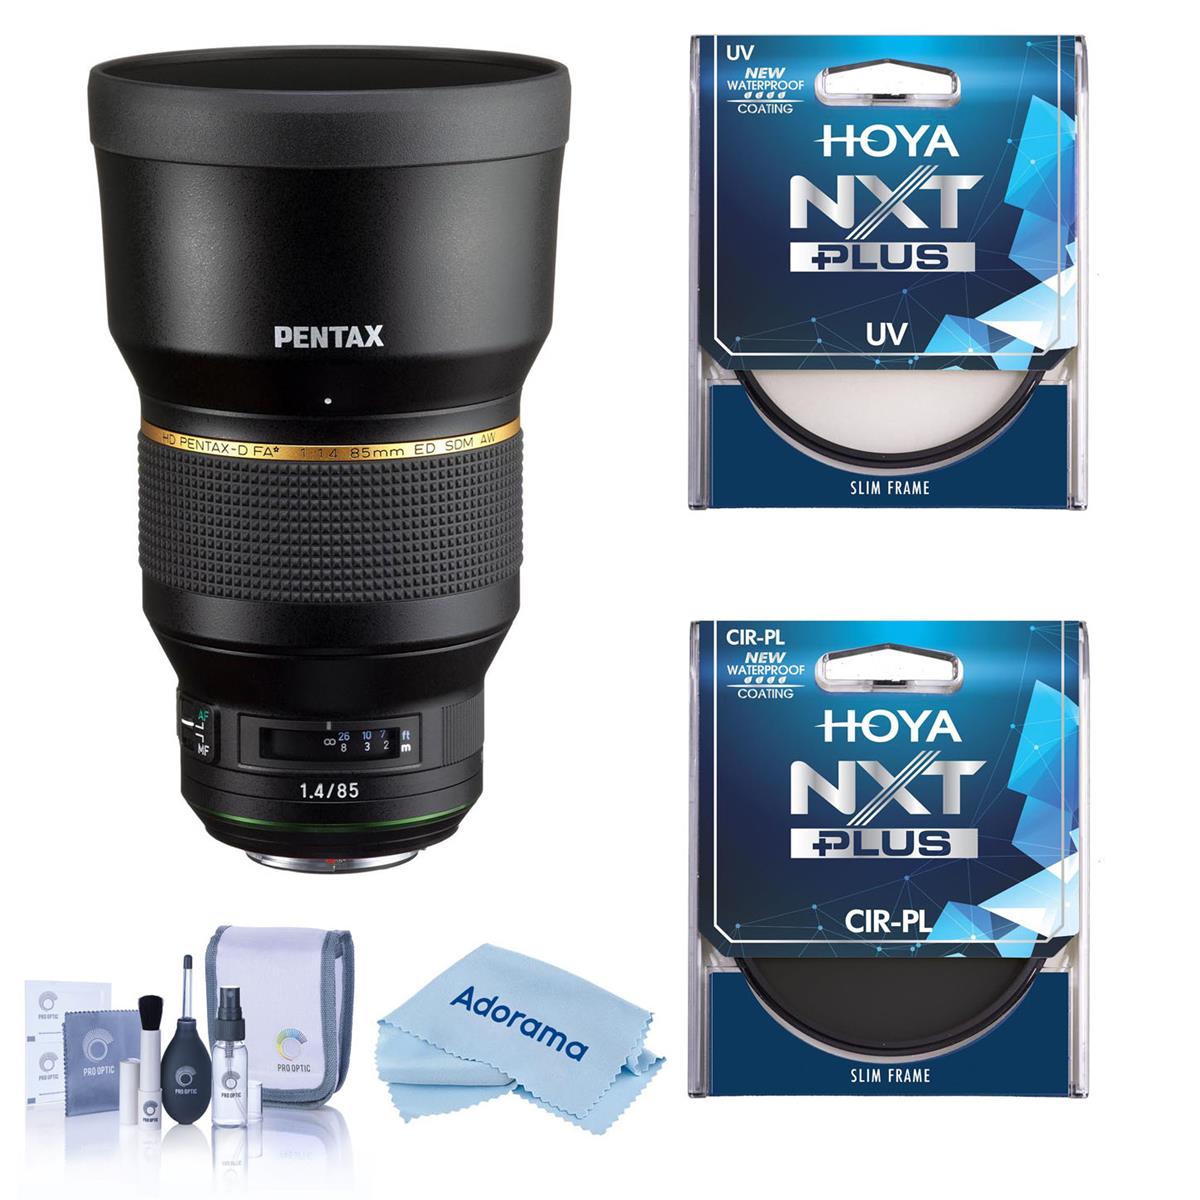 

Pentax HD Pentax-D FA 85mm f/1.4 ED SDM AW Lens w/Hoya 82mm UV/CPL Filter Kit